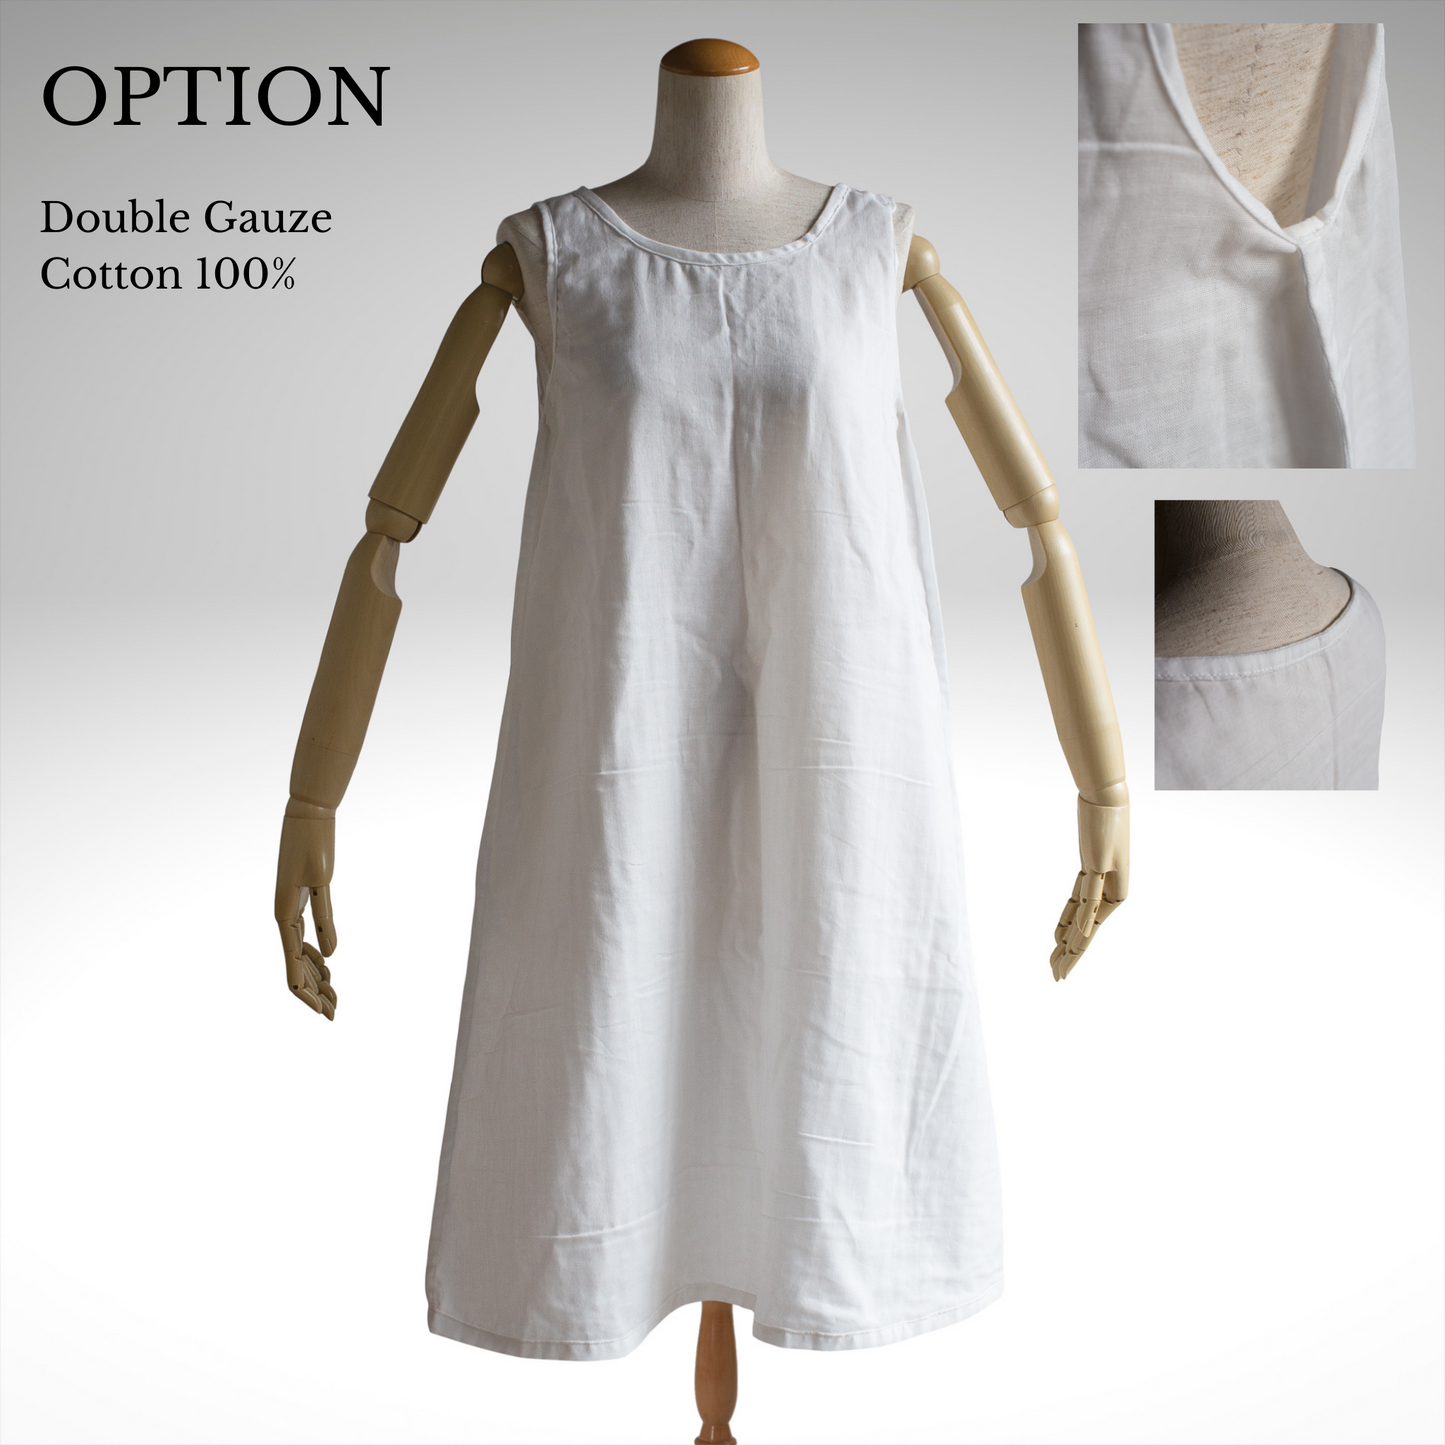 PSNY Hemp Linen White Gradation Sky Blue Side Tuck Dress French Sleeve Maxi Length AP15